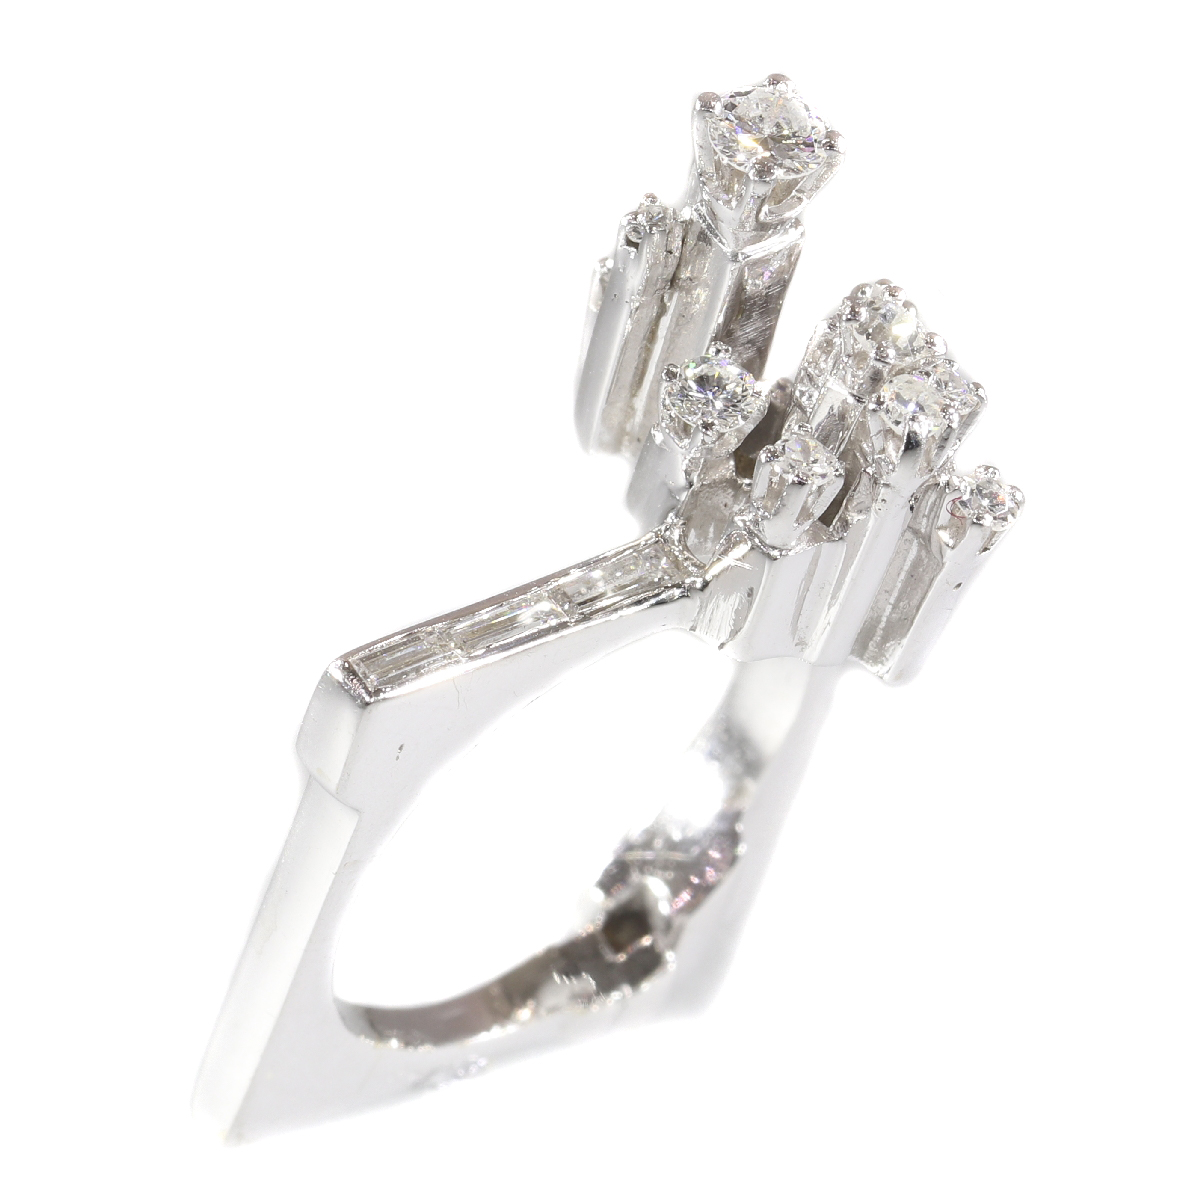 French Vintage Sixties strong design artist Vendome platinum diamond ring